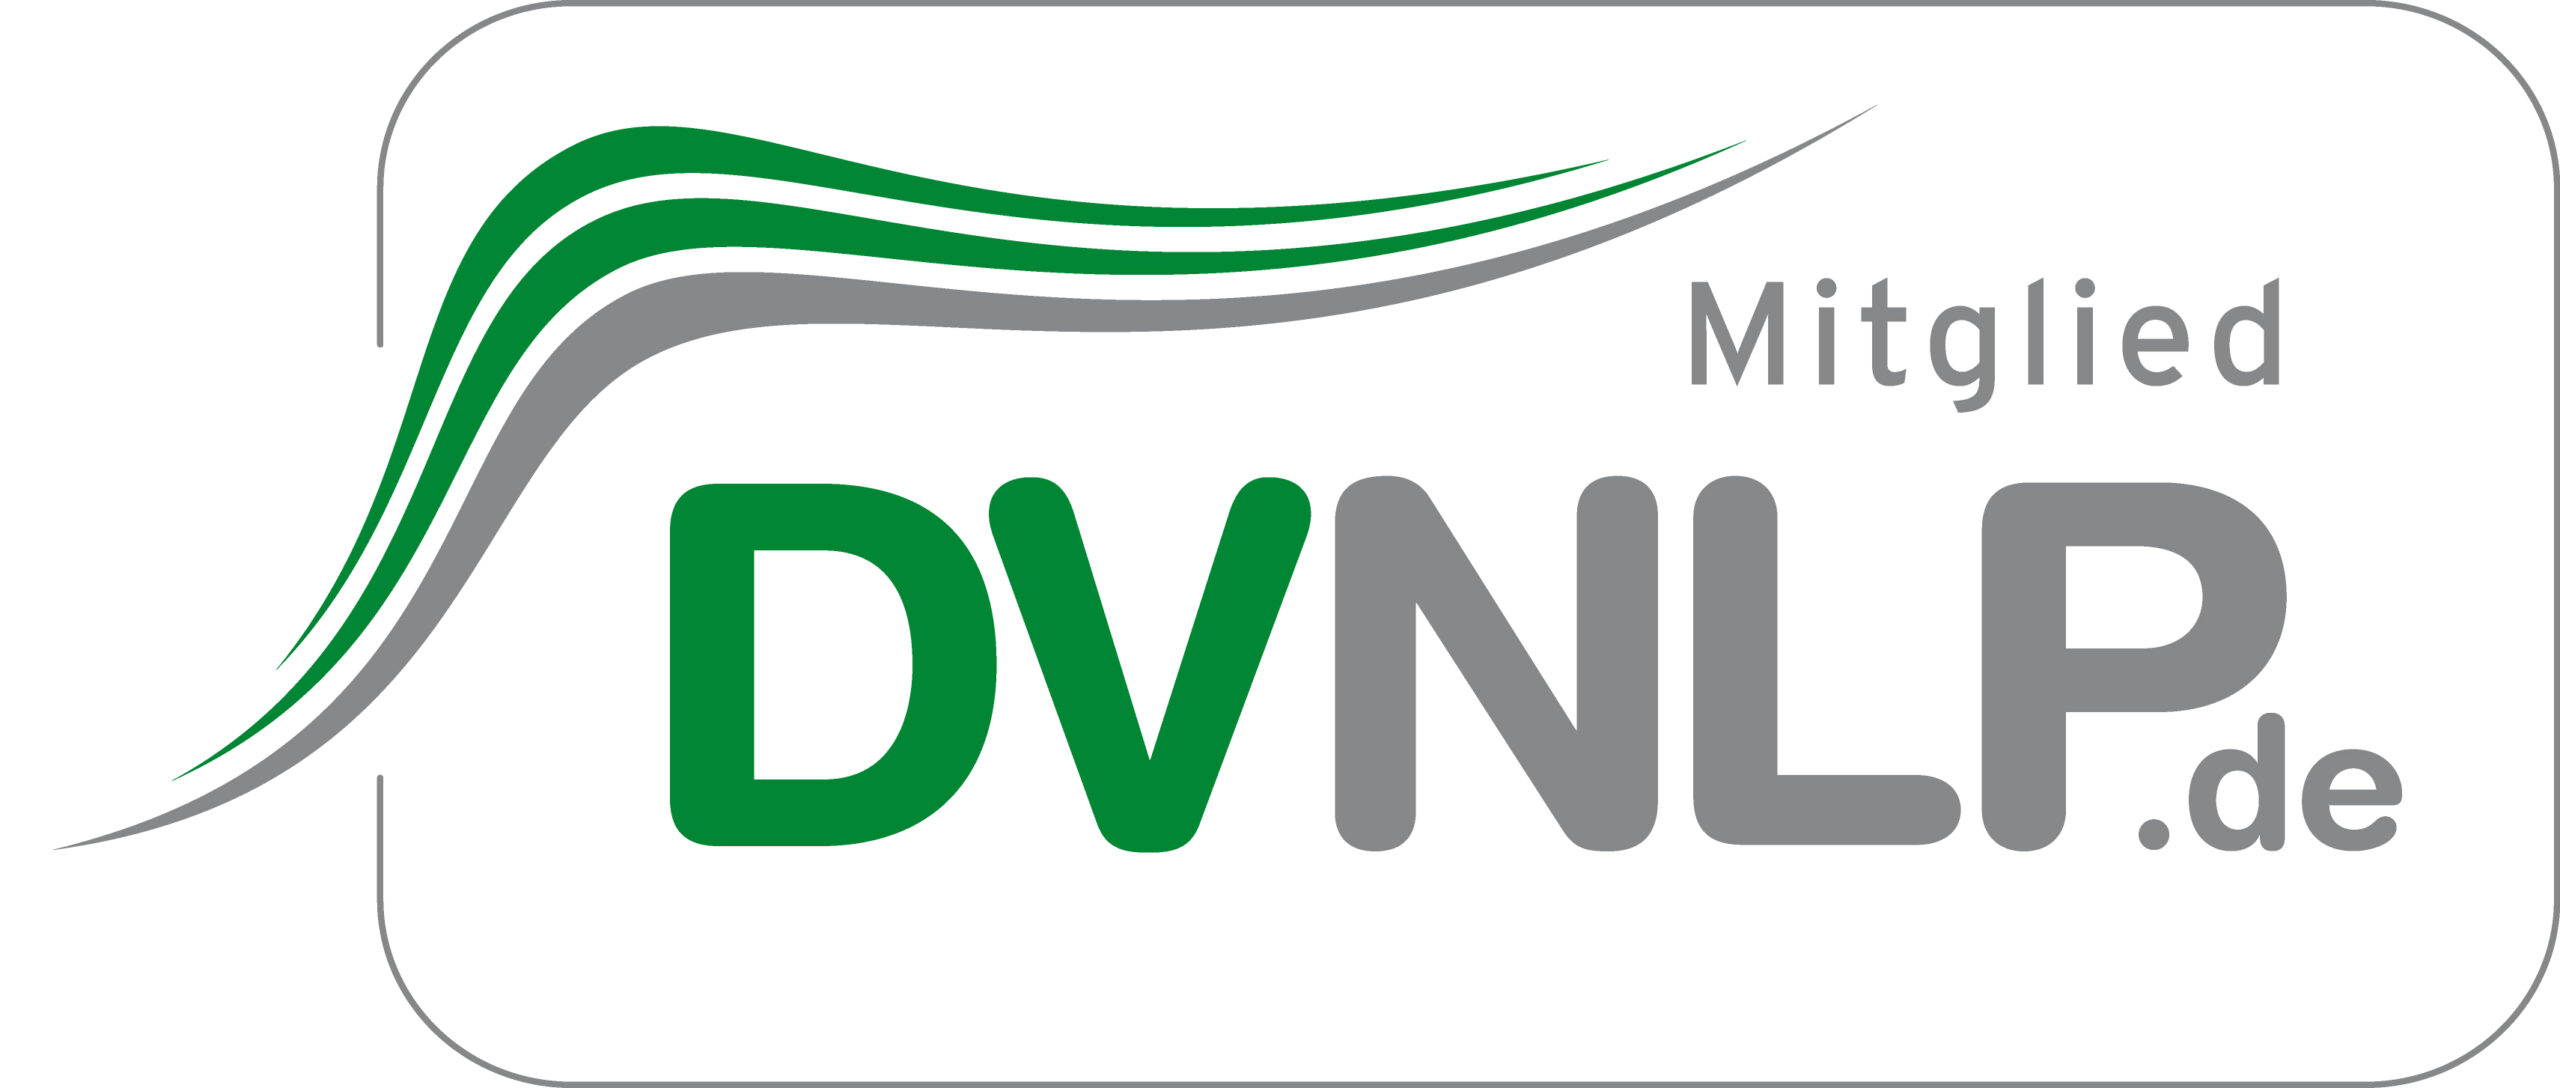 Mitglied DVNLP.de